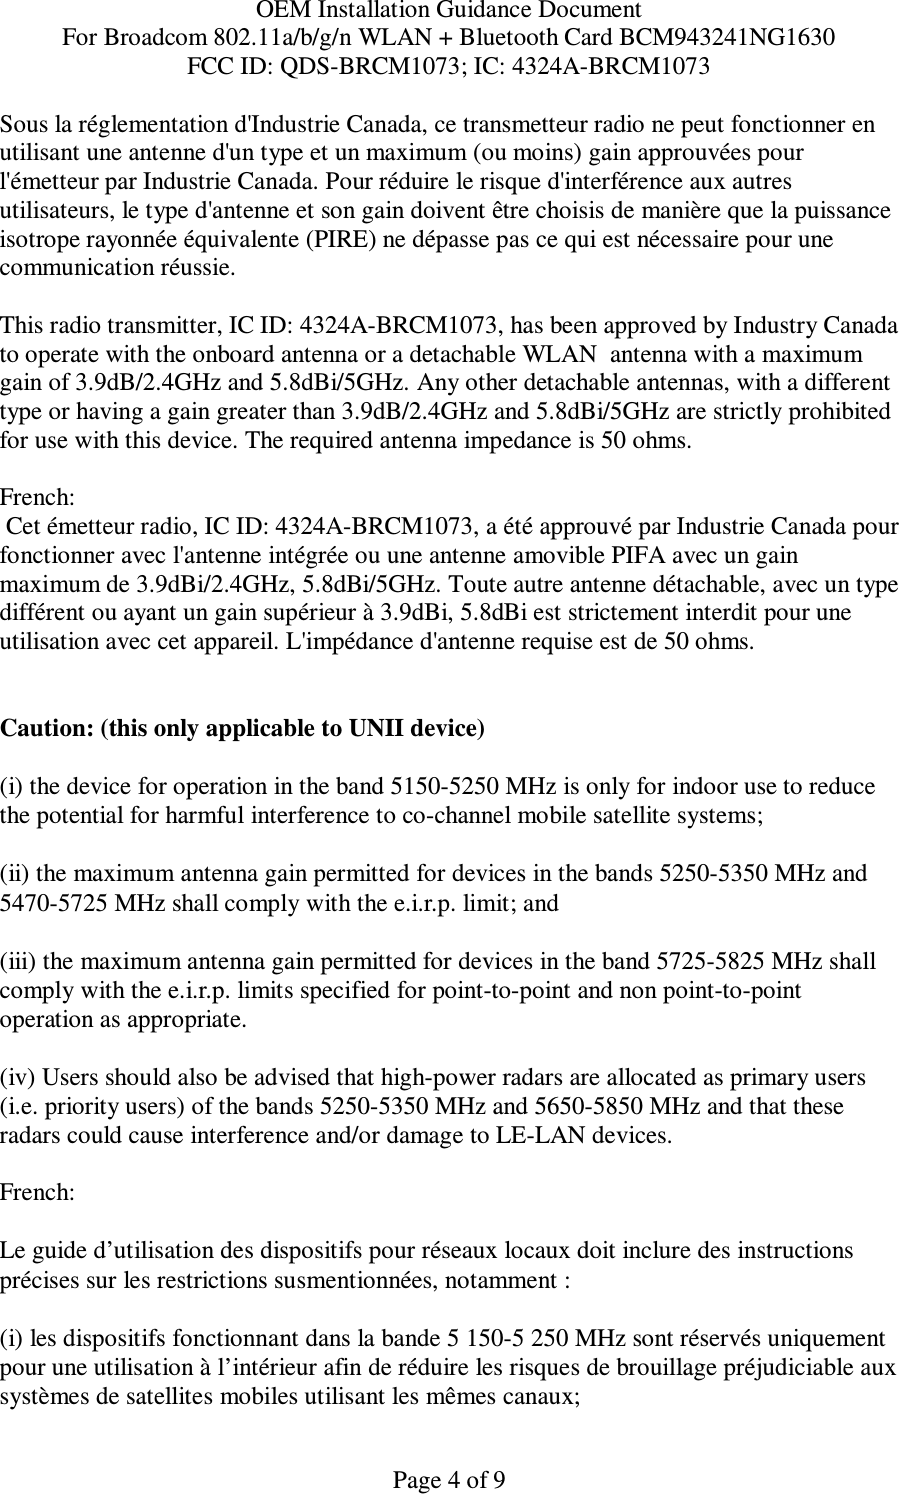 OEM Installation Guidance Document For Broadcom 802.11a/b/g/n WLAN + Bluetooth Card BCM943241NG1630 FCC ID: QDS-BRCM1073; IC: 4324A-BRCM1073  Page 4 of 9 Sous la réglementation d&apos;Industrie Canada, ce transmetteur radio ne peut fonctionner en utilisant une antenne d&apos;un type et un maximum (ou moins) gain approuvées pour l&apos;émetteur par Industrie Canada. Pour réduire le risque d&apos;interférence aux autres utilisateurs, le type d&apos;antenne et son gain doivent être choisis de manière que la puissance isotrope rayonnée équivalente (PIRE) ne dépasse pas ce qui est nécessaire pour une communication réussie.  This radio transmitter, IC ID: 4324A-BRCM1073, has been approved by Industry Canada to operate with the onboard antenna or a detachable WLAN  antenna with a maximum gain of 3.9dB/2.4GHz and 5.8dBi/5GHz. Any other detachable antennas, with a different type or having a gain greater than 3.9dB/2.4GHz and 5.8dBi/5GHz are strictly prohibited for use with this device. The required antenna impedance is 50 ohms.  French:   Cet émetteur radio, IC ID: 4324A-BRCM1073, a été approuvé par Industrie Canada pour fonctionner avec l&apos;antenne intégrée ou une antenne amovible PIFA avec un gain maximum de 3.9dBi/2.4GHz, 5.8dBi/5GHz. Toute autre antenne détachable, avec un type différent ou ayant un gain supérieur à 3.9dBi, 5.8dBi est strictement interdit pour une utilisation avec cet appareil. L&apos;impédance d&apos;antenne requise est de 50 ohms.   Caution: (this only applicable to UNII device) (i) the device for operation in the band 5150-5250 MHz is only for indoor use to reduce the potential for harmful interference to co-channel mobile satellite systems; (ii) the maximum antenna gain permitted for devices in the bands 5250-5350 MHz and 5470-5725 MHz shall comply with the e.i.r.p. limit; and (iii) the maximum antenna gain permitted for devices in the band 5725-5825 MHz shall comply with the e.i.r.p. limits specified for point-to-point and non point-to-point operation as appropriate. (iv) Users should also be advised that high-power radars are allocated as primary users (i.e. priority users) of the bands 5250-5350 MHz and 5650-5850 MHz and that these radars could cause interference and/or damage to LE-LAN devices.  French:  Le guide d’utilisation des dispositifs pour réseaux locaux doit inclure des instructions précises sur les restrictions susmentionnées, notamment : (i) les dispositifs fonctionnant dans la bande 5 150-5 250 MHz sont réservés uniquement pour une utilisation à l’intérieur afin de réduire les risques de brouillage préjudiciable aux systèmes de satellites mobiles utilisant les mêmes canaux; 